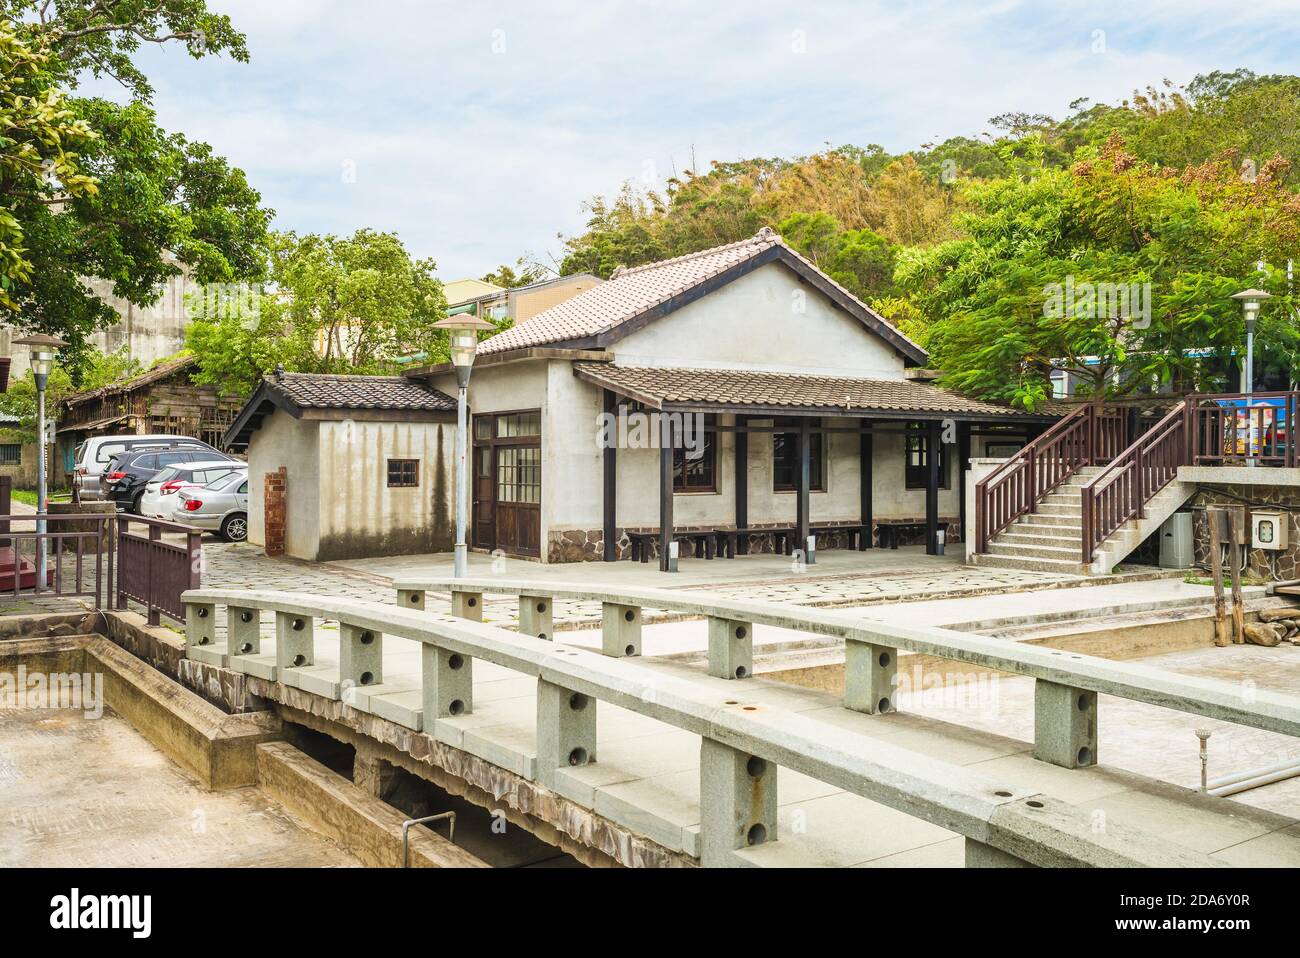 Ancien dortoir ferroviaire dans le canton de zaoqiao, taïwan Banque D'Images